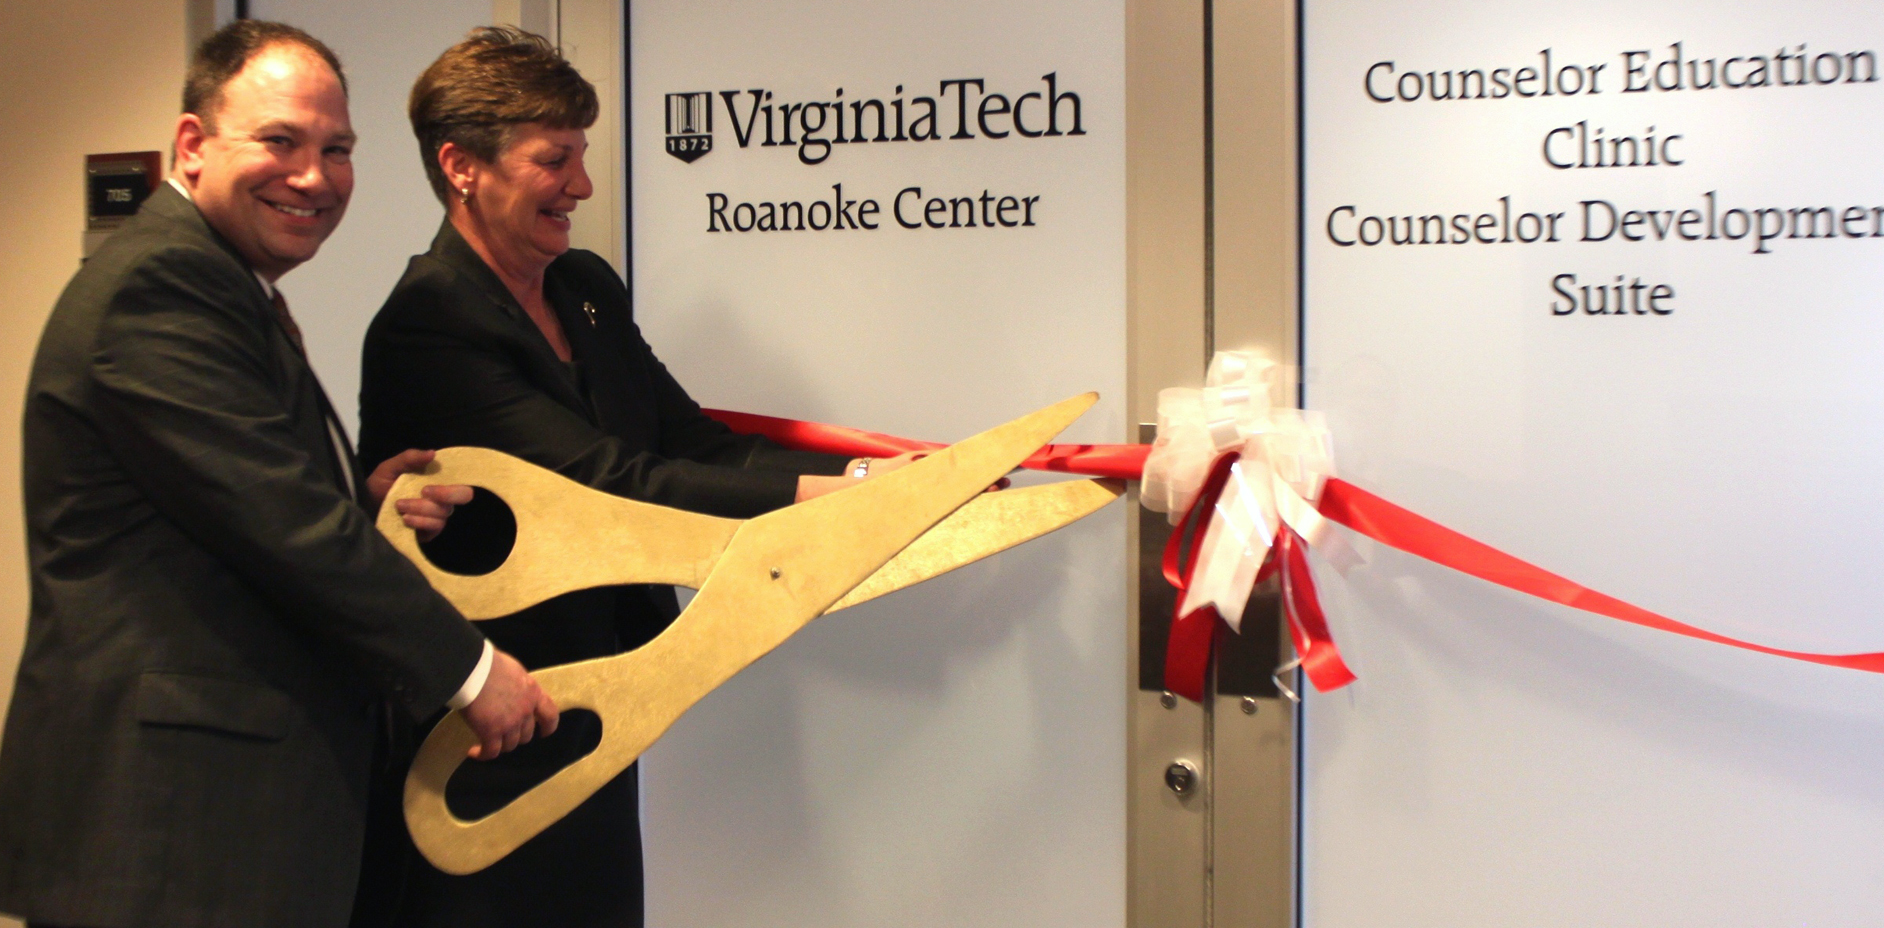 Gerard Lawson and Susan Short of Virginia Tech cut ribbon.